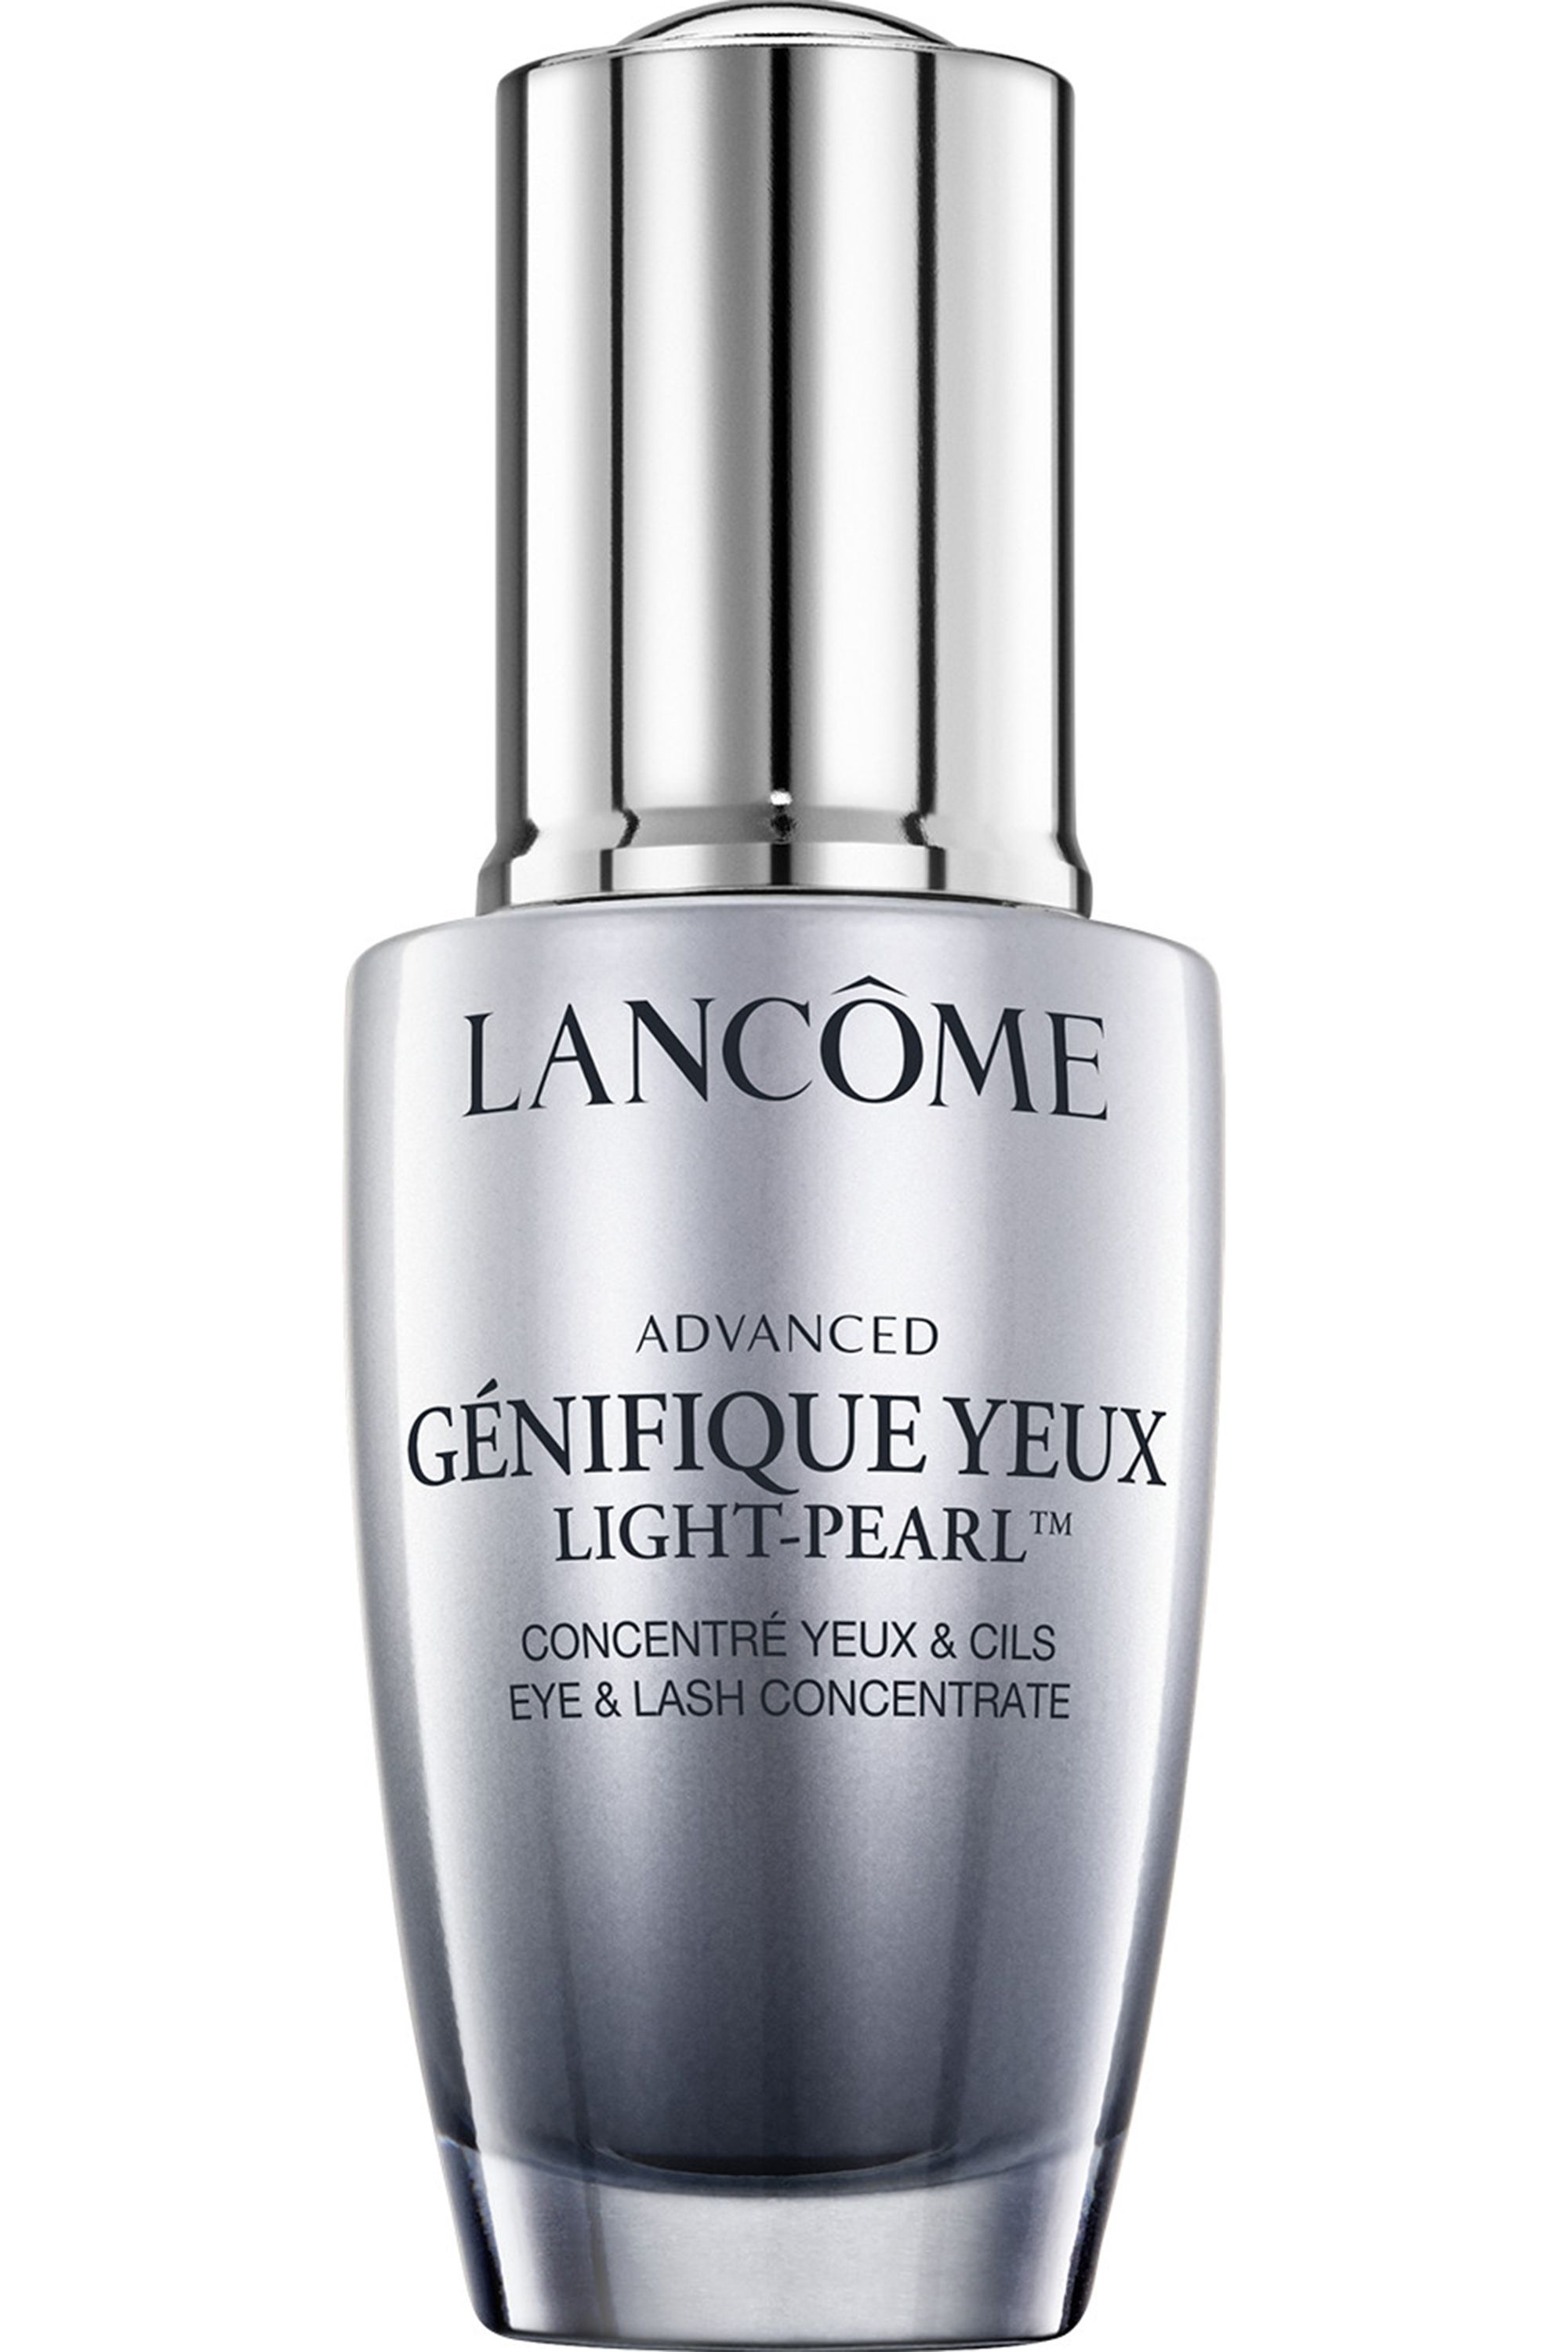 Lancome genifique yeux. Lancôme Advanced Genifique сыворотка. Lancome Genifique yeux Light-Pearl. Lancome активатор молодости Advanced Genifique 5 мл.